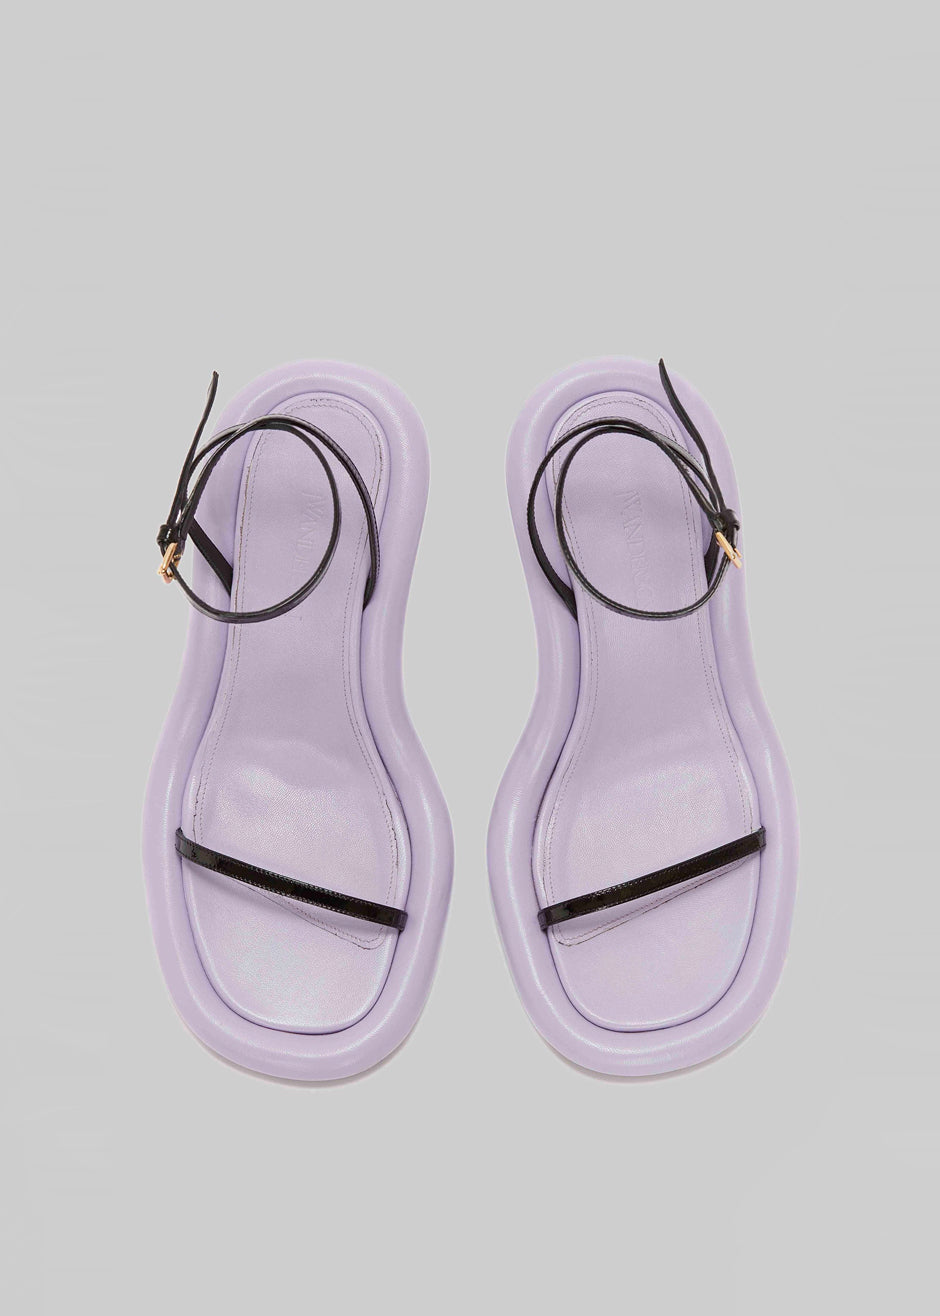 JW Anderson Bumper Heel Sandal - Lilac/Black - 5